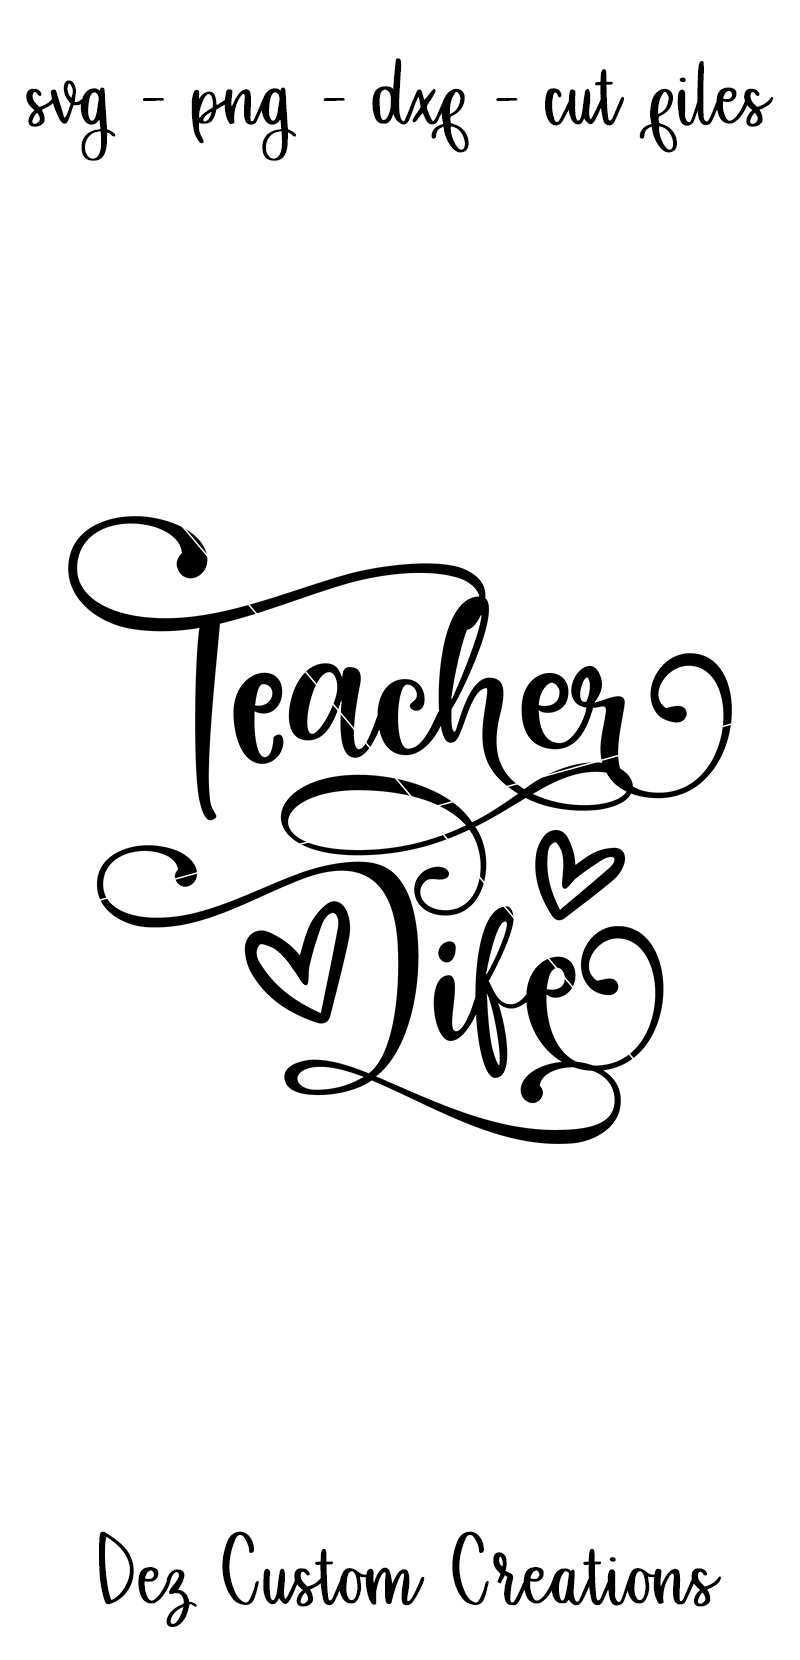 Download Teacher Life - SVG, DXF, PNG cut files